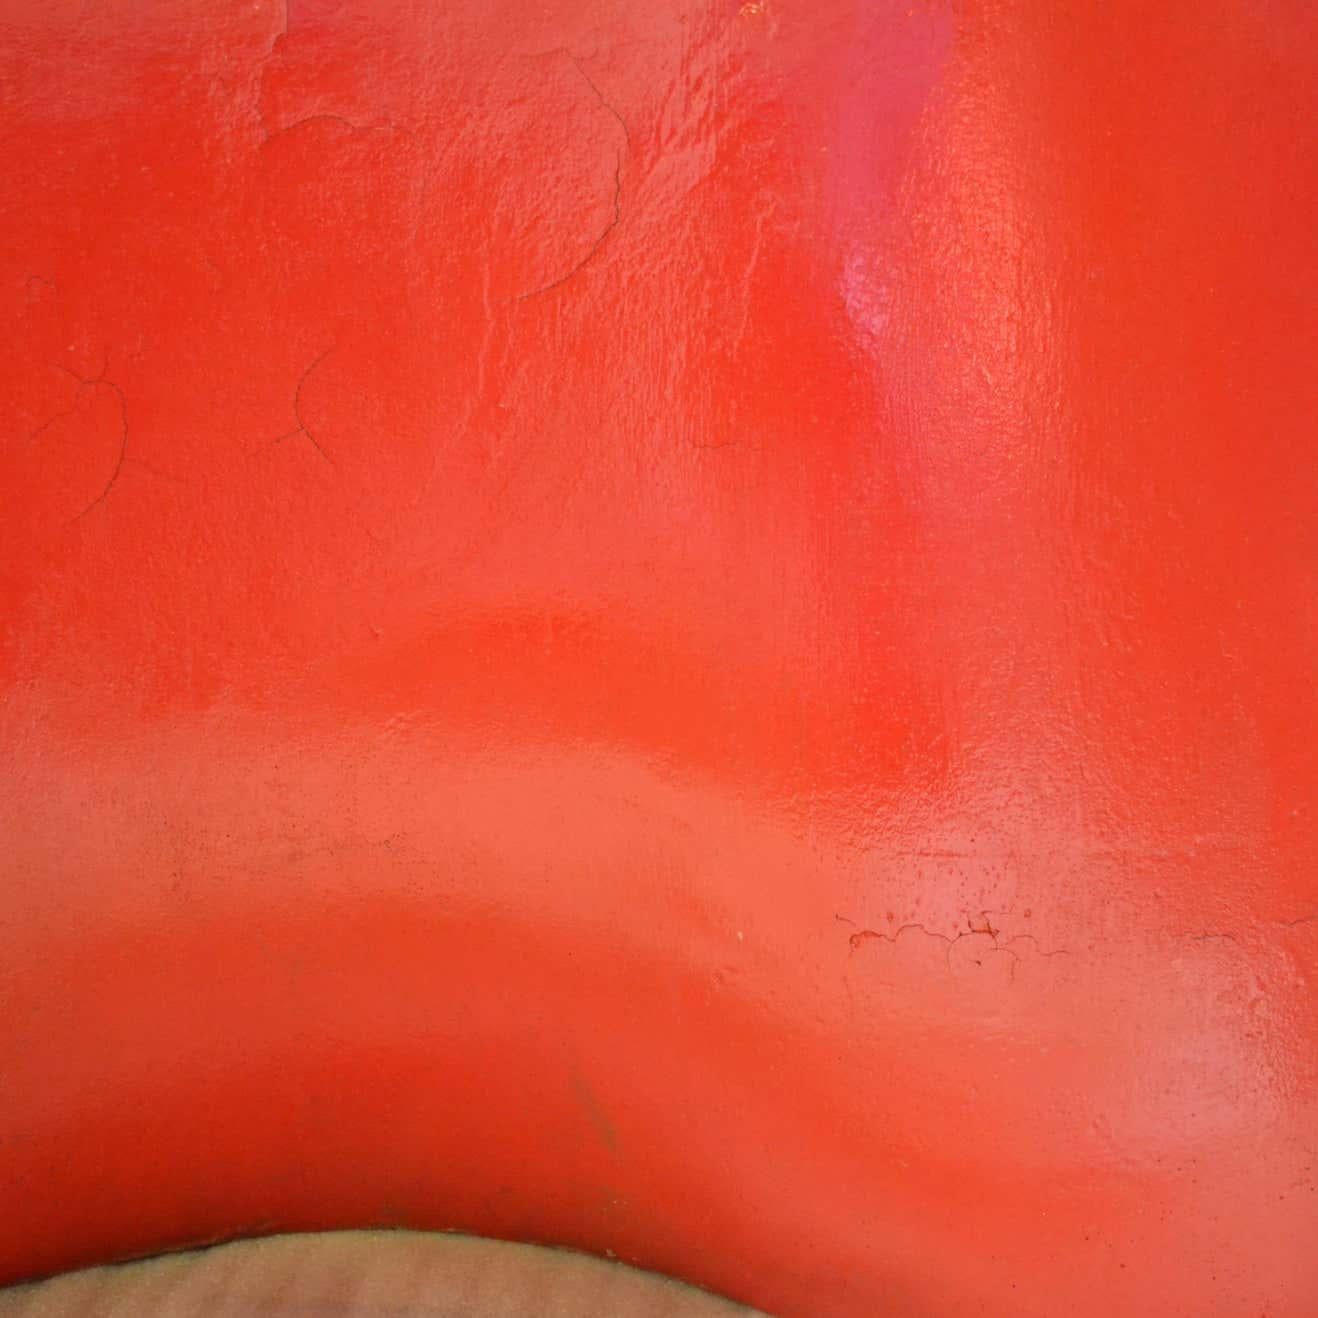 Spanish Salvador Dali Surrealist 'Salivasofa' Unique Prototype Red Lips Sofa For Sale